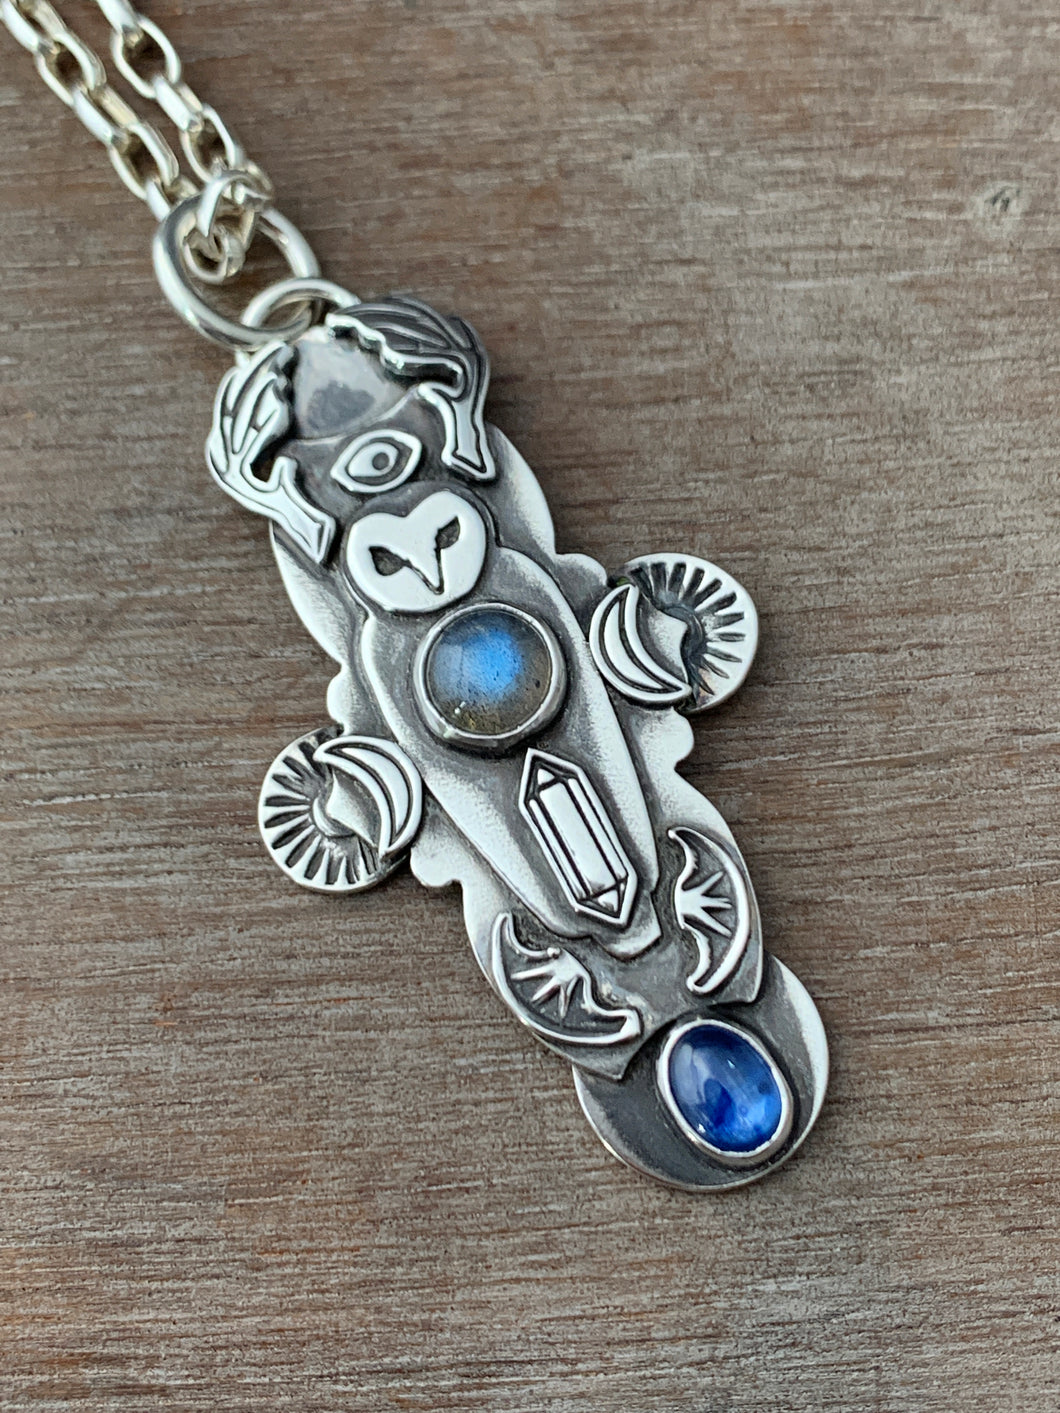 Owl pendant #5 - Labradorite and Kyanite